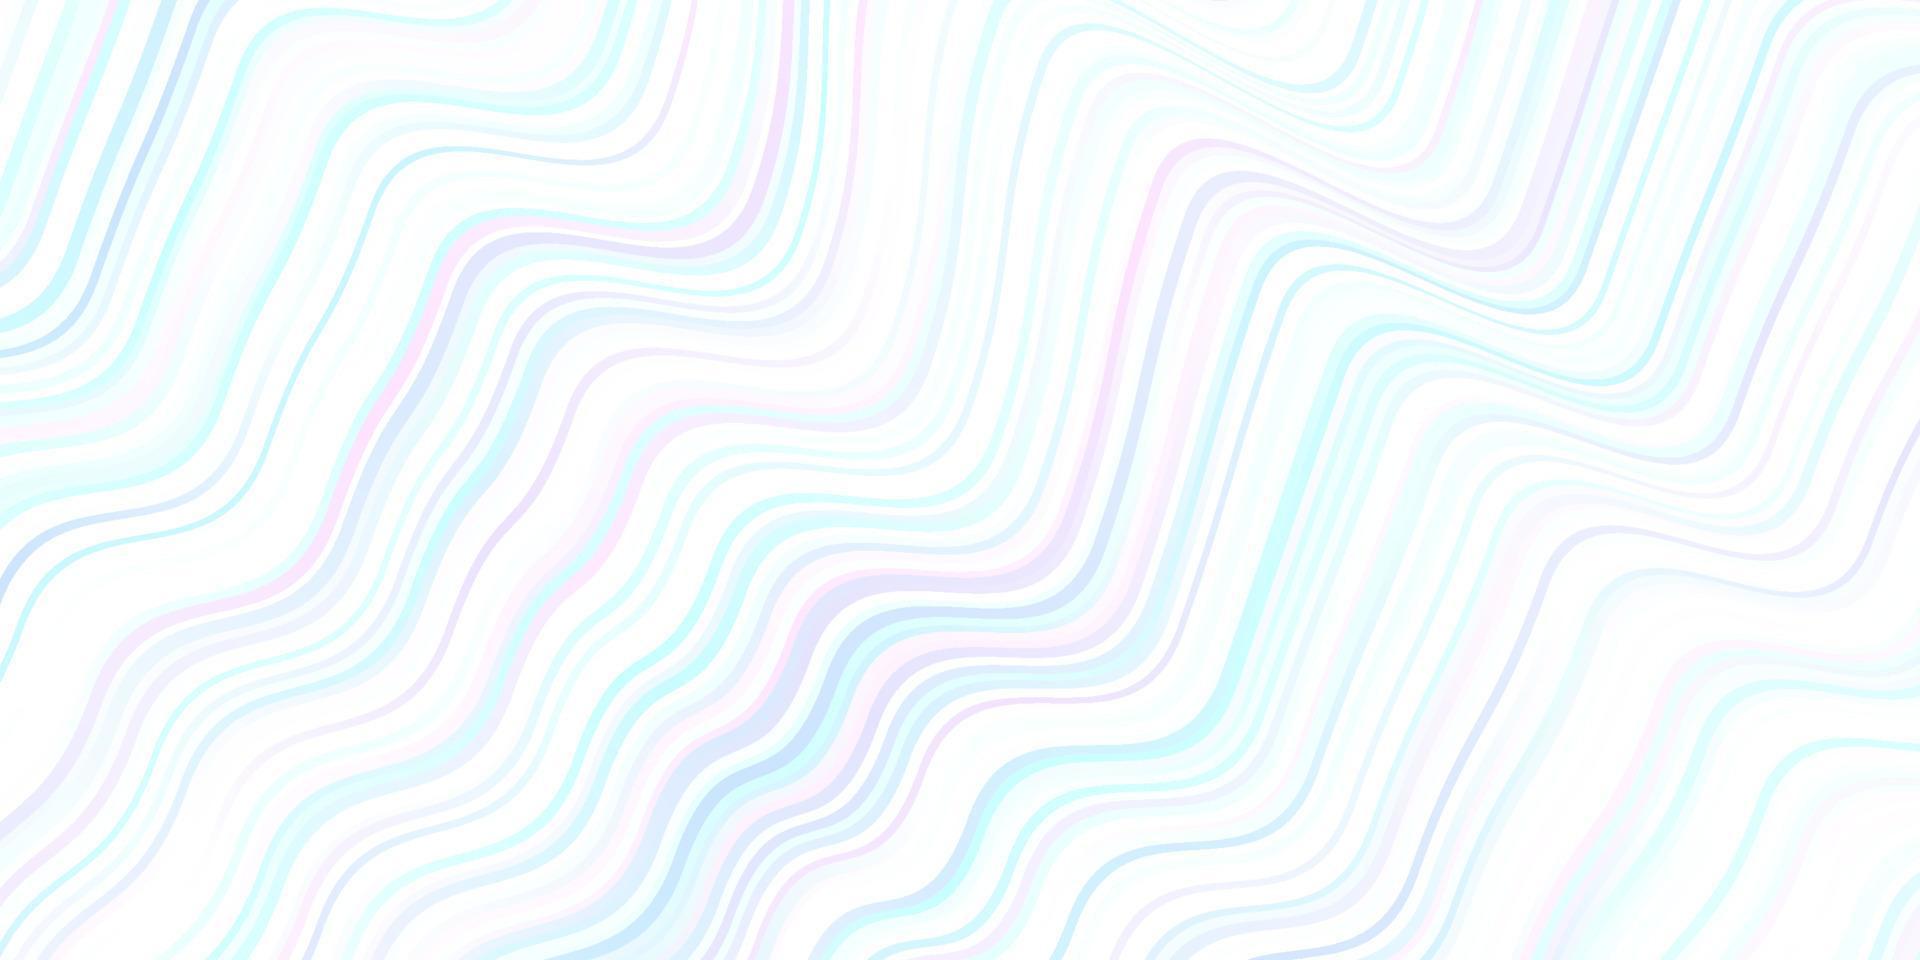 diseño de vector azul claro con líneas curvas.